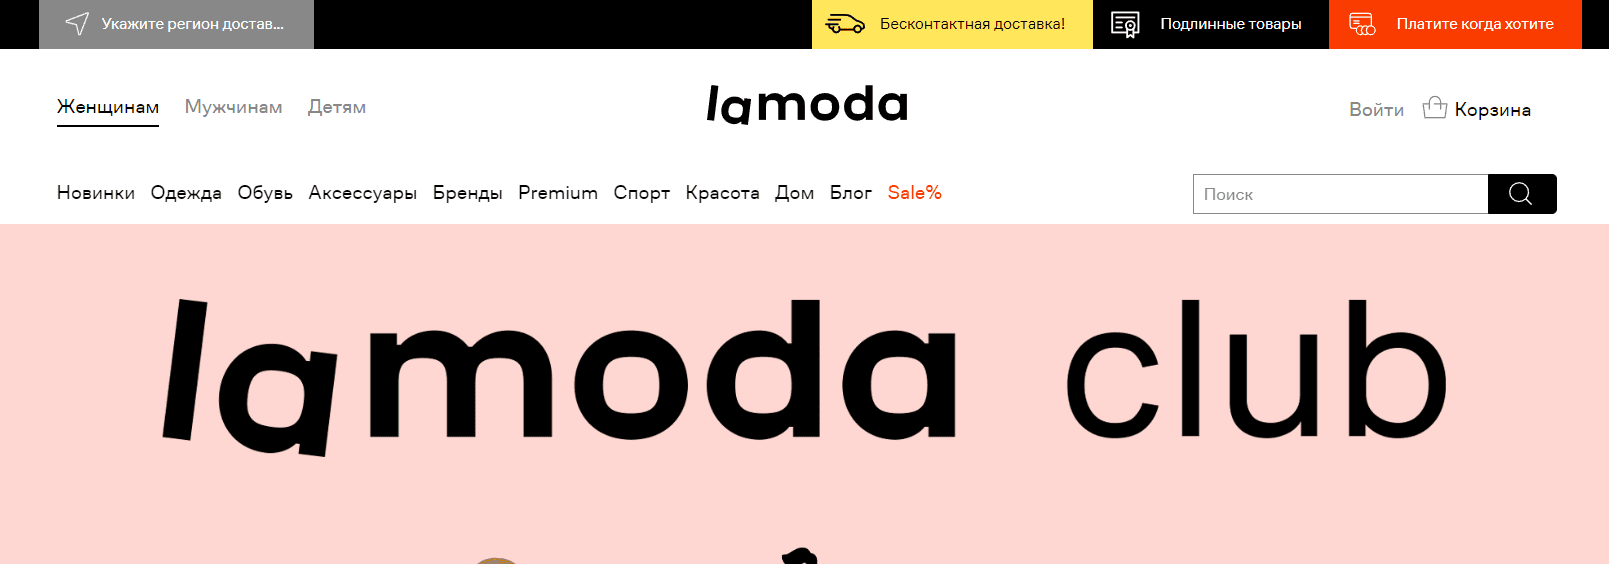 Программа лояльности lamoda.by (lamoda_club) - бонусные баллы, скидки